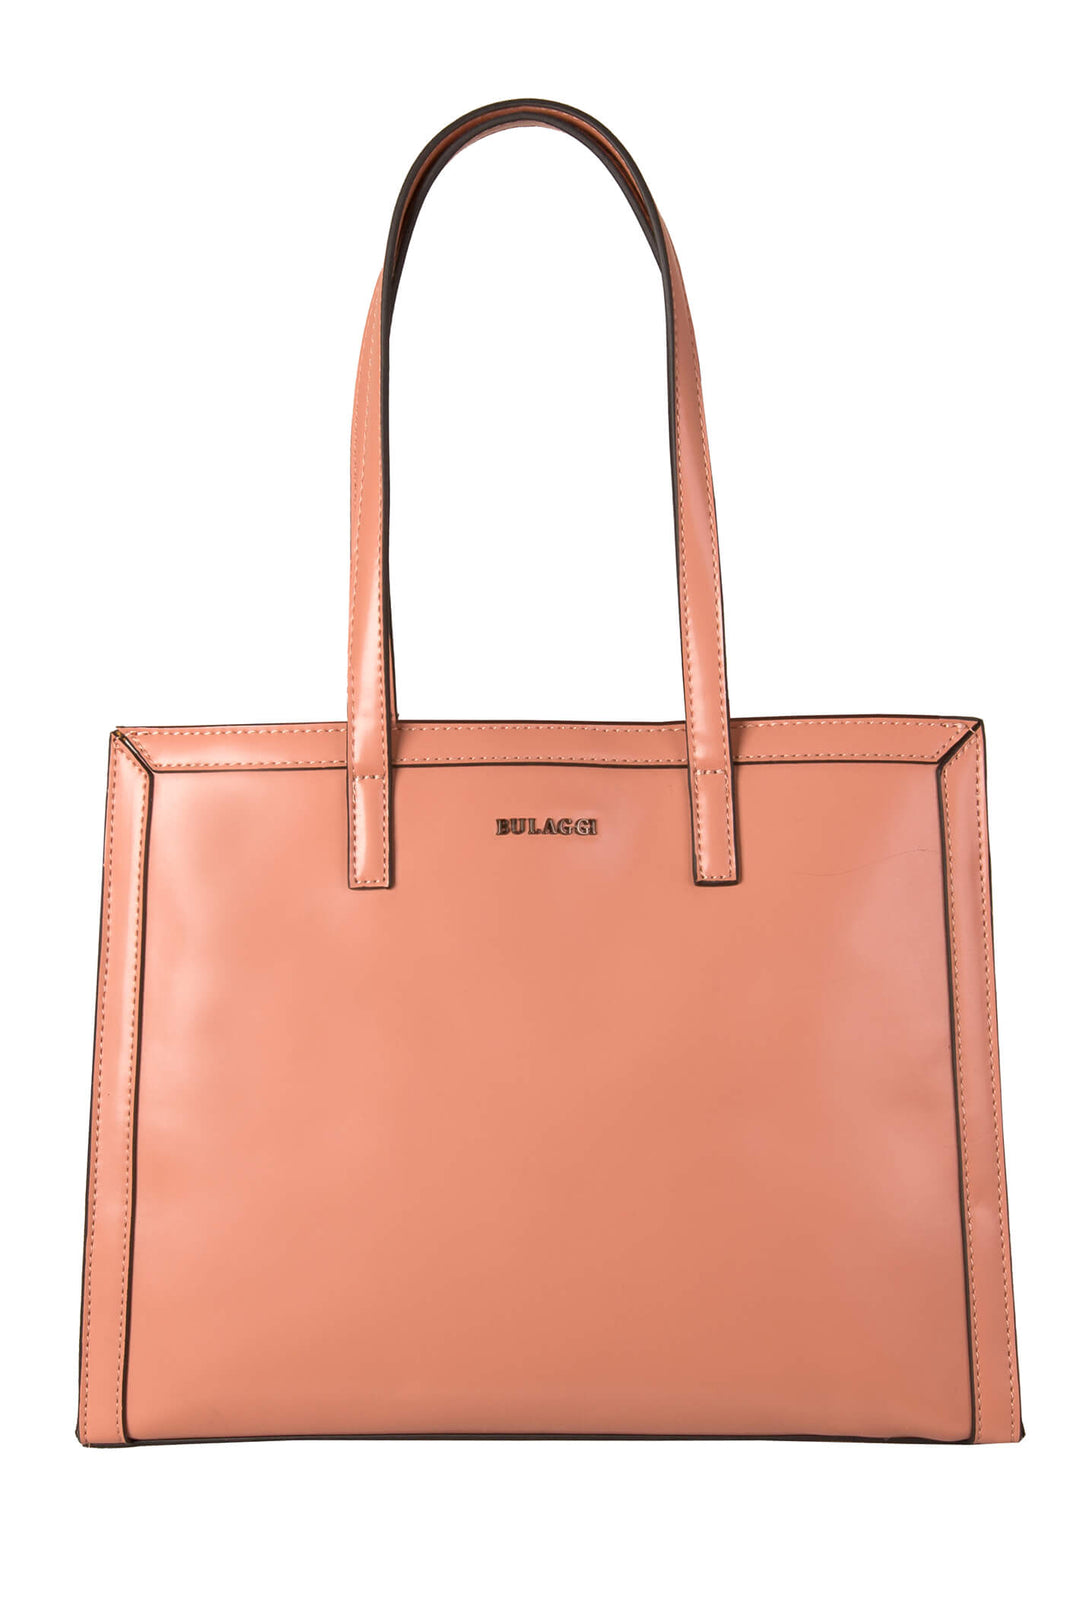 Bulaggi Violet 31209.66 Dusty Pink Shopper Handbag - Shirley Allum Boutique